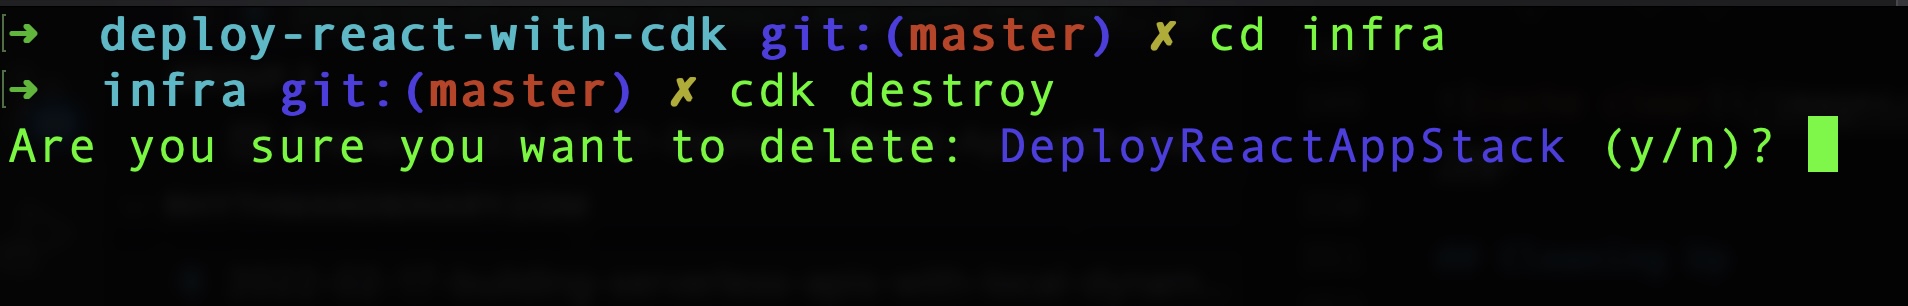 cdk destroy first command